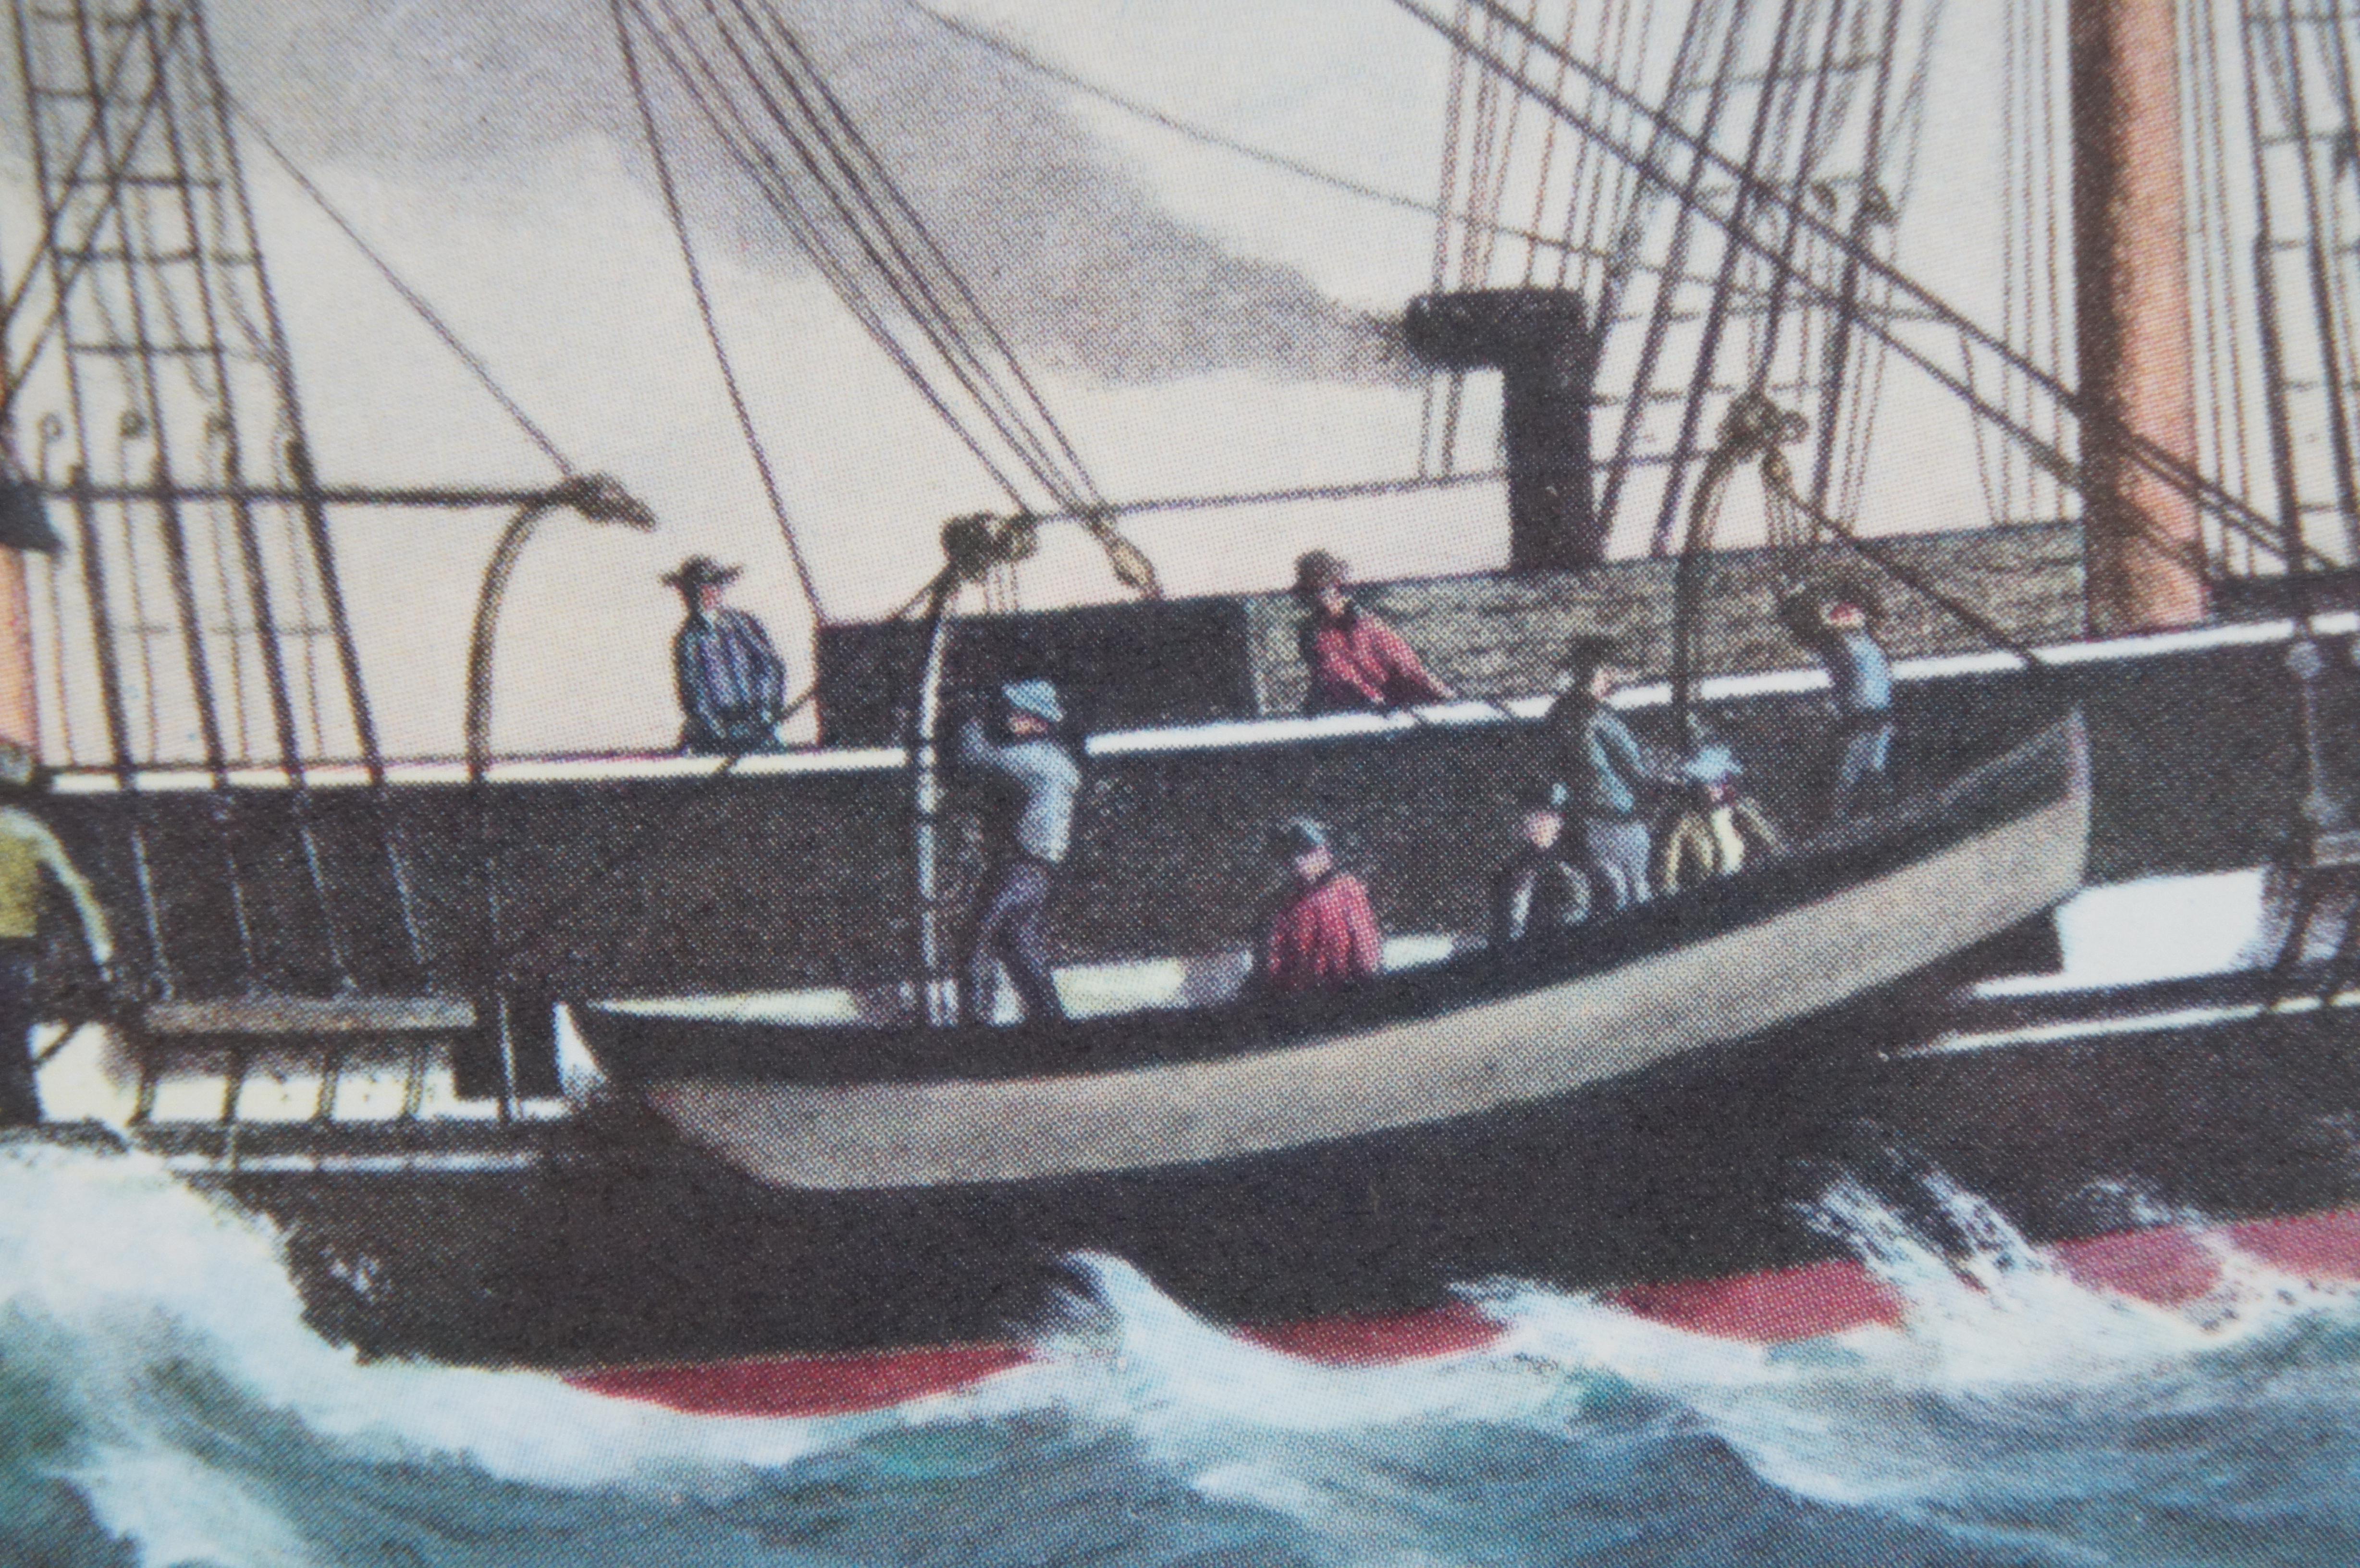 Currier & Ives American Whaler Nautical Maritime Fishing Ship Print 21